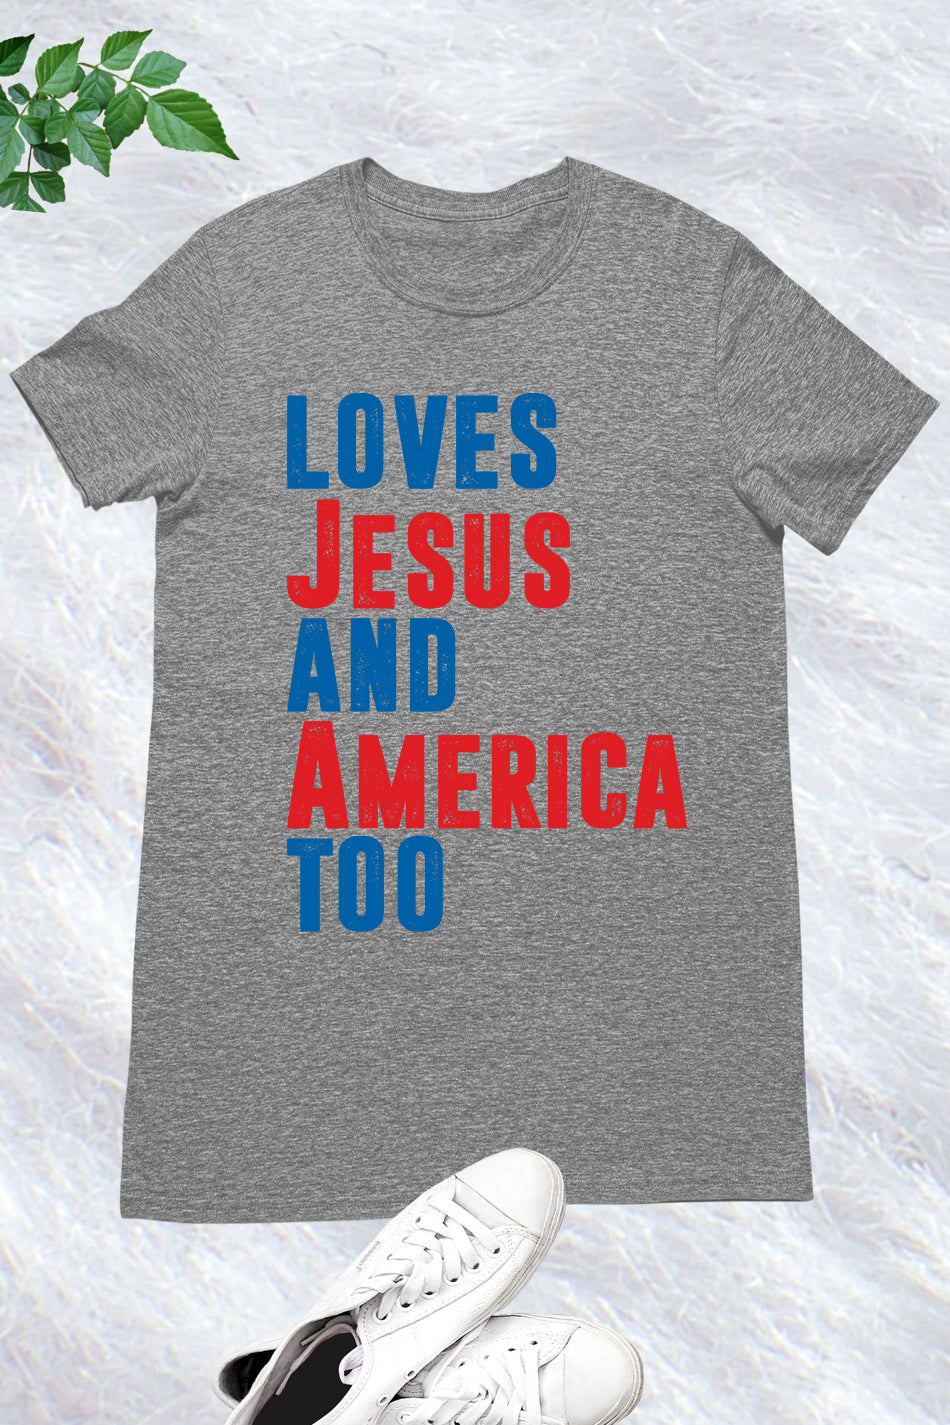 Loves Jesus and America Too Tees